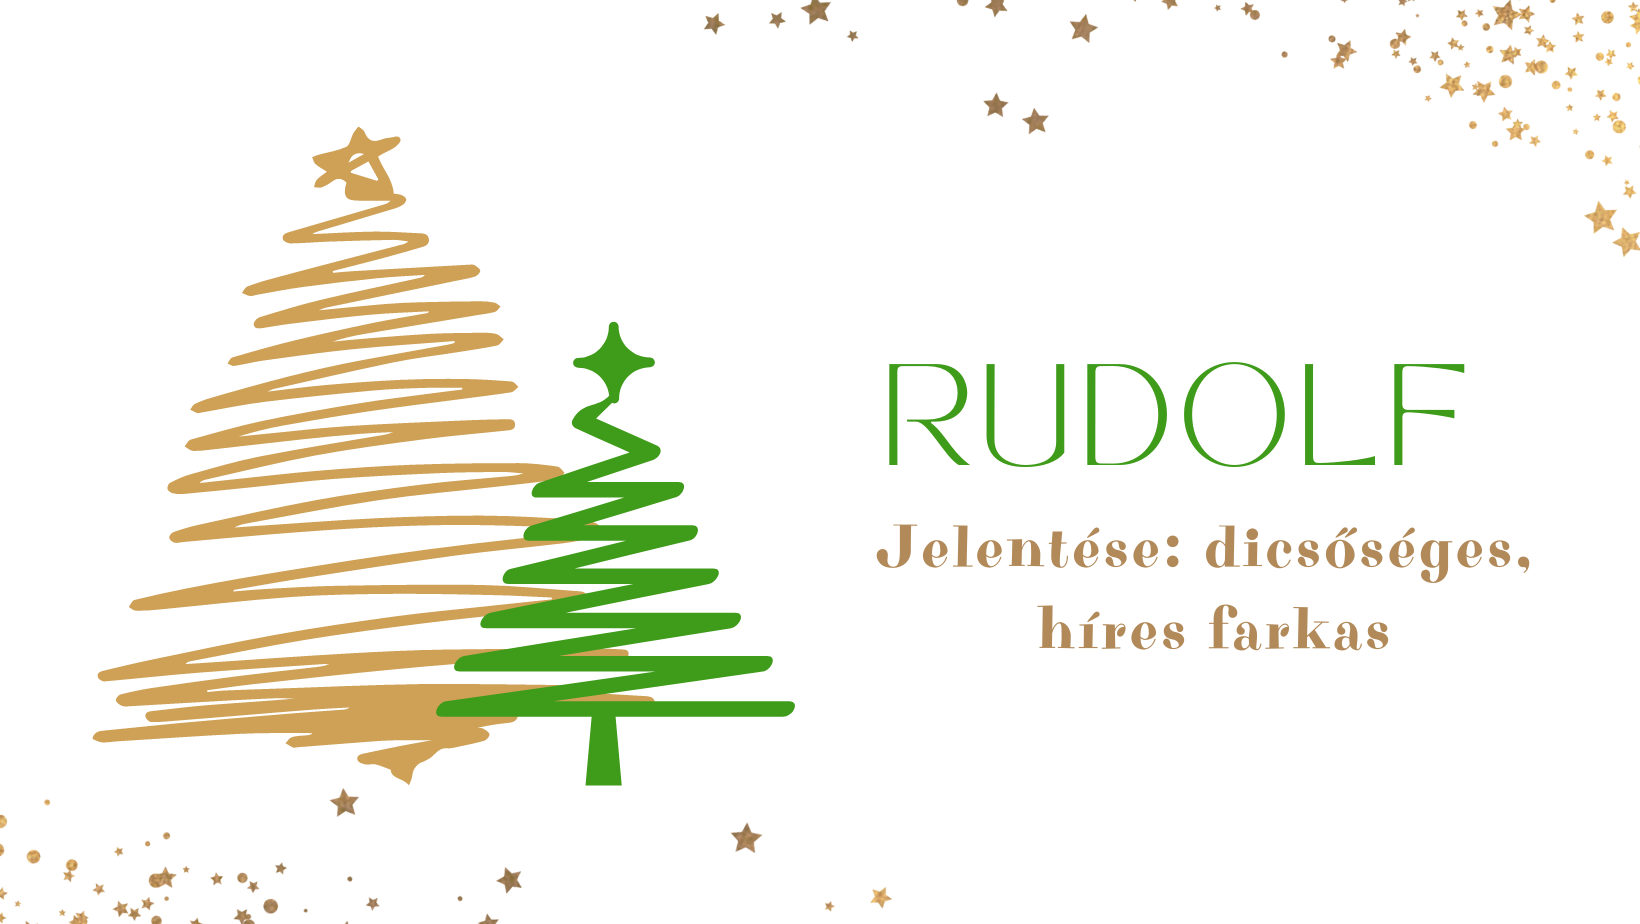 Rudolf név jelentése